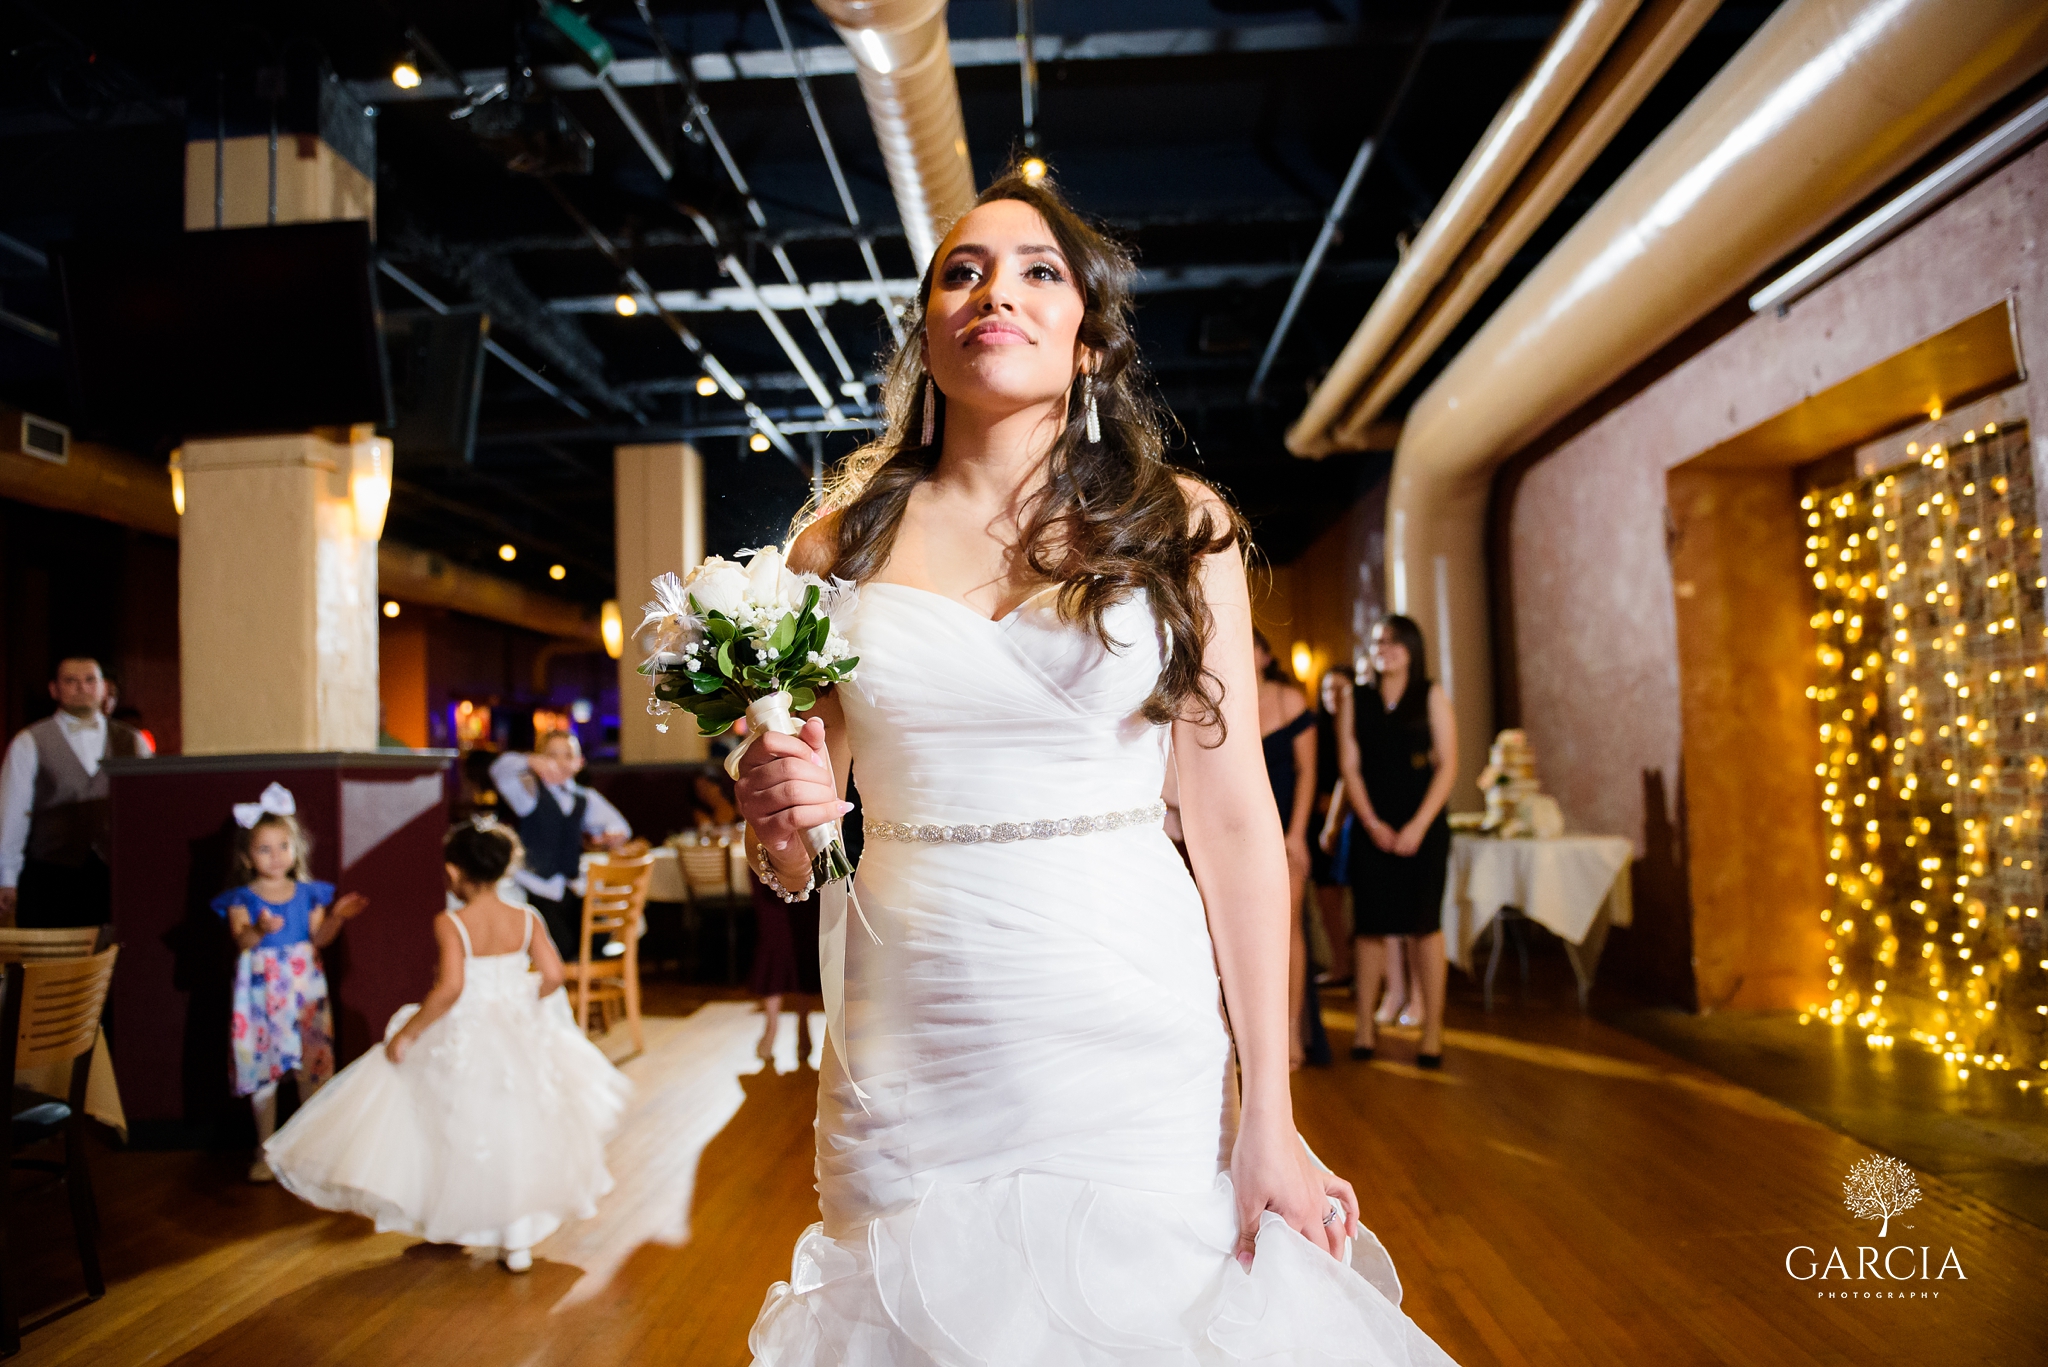 Emily-Junior-Wedding-Garcia-Photography-4625.jpg